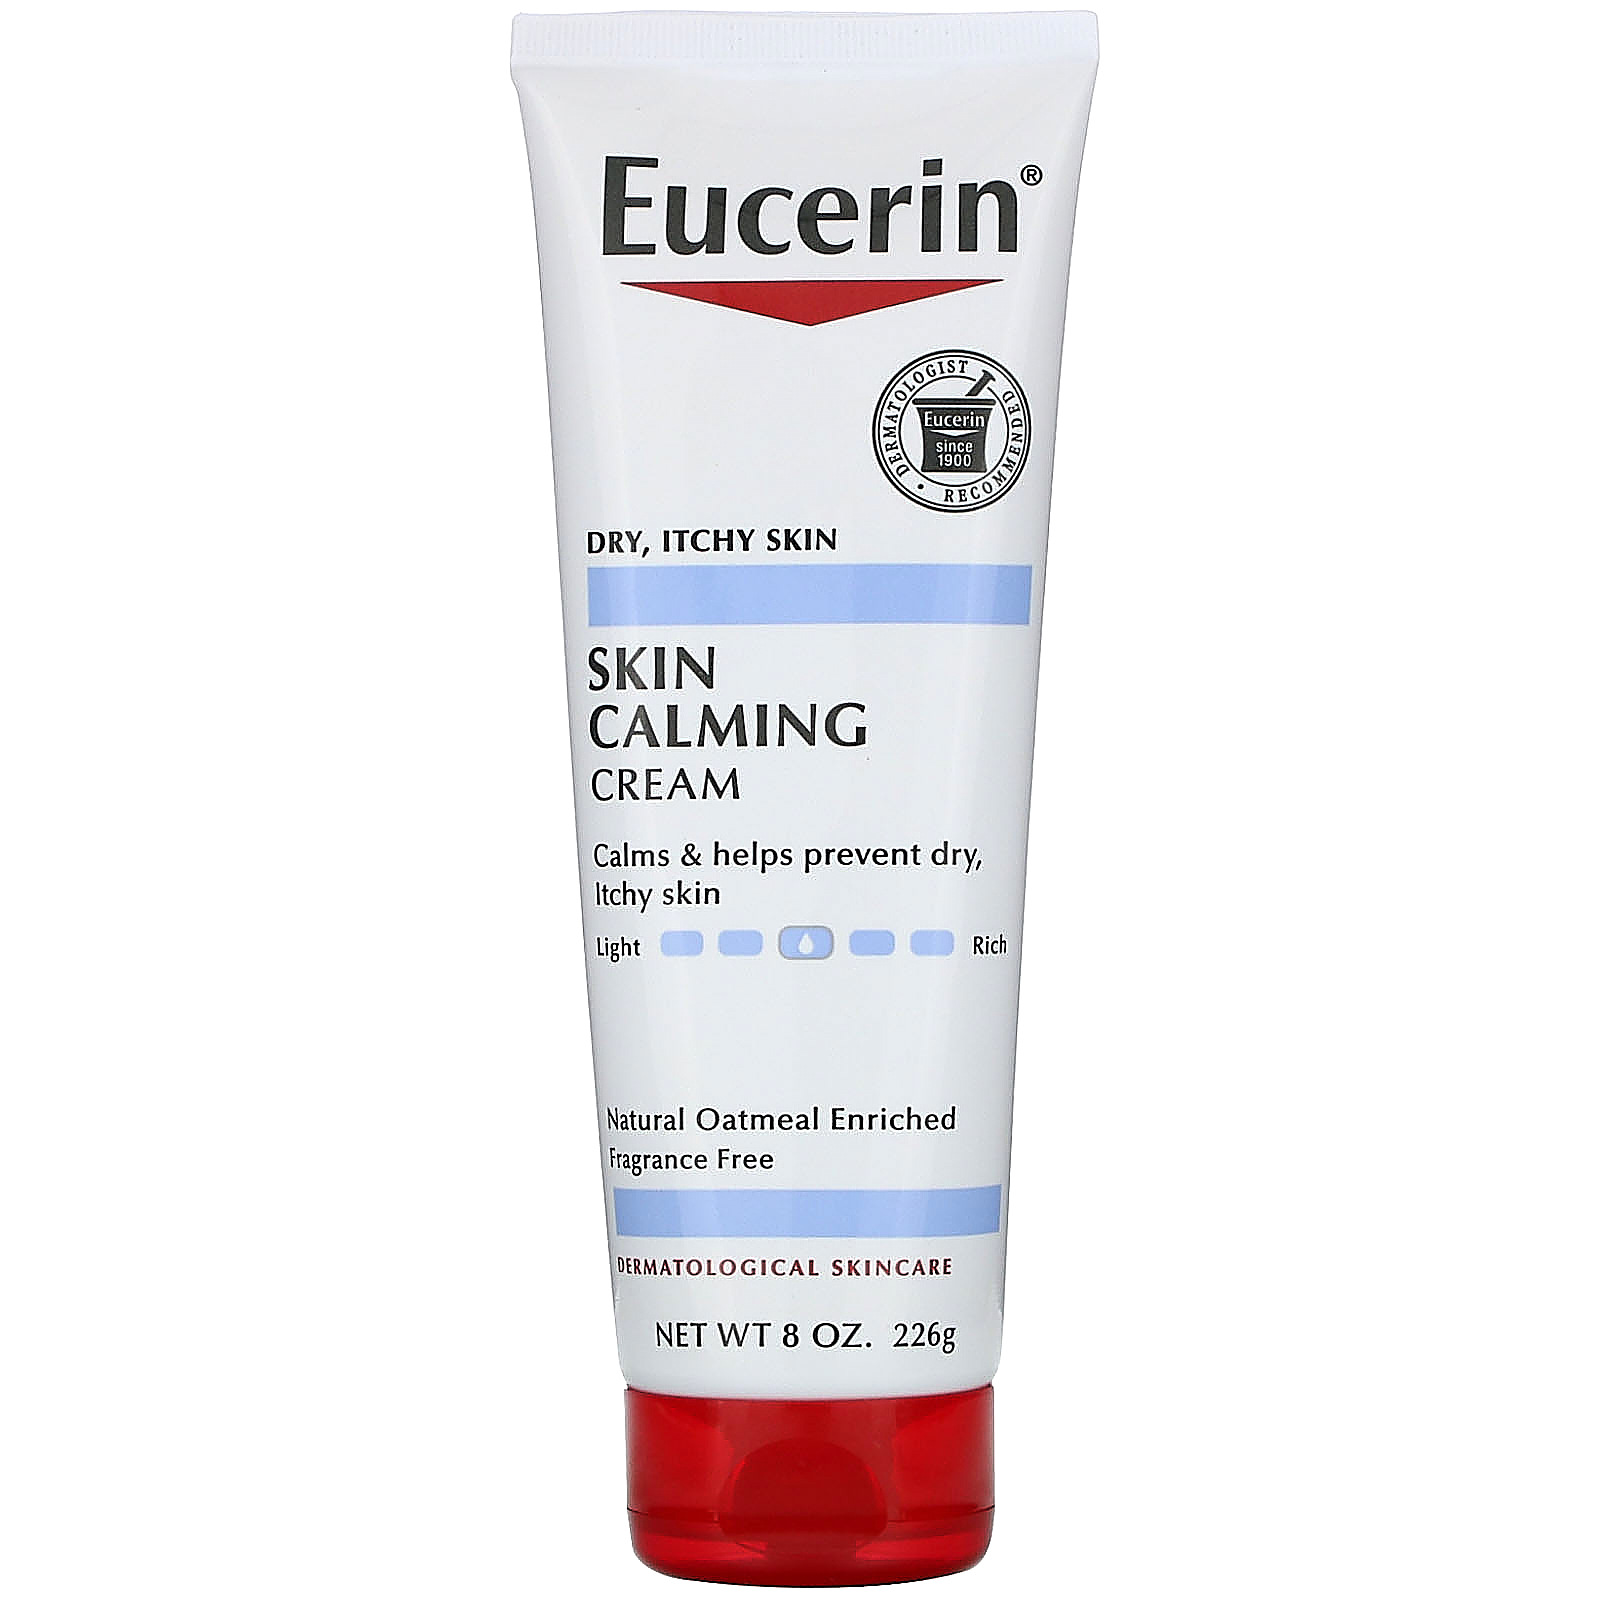 Tol Autonoom filter Eucerin, Skin Calming Creme, Dry, Itchy Skin, Fragrance Free, 8 oz (226 g)